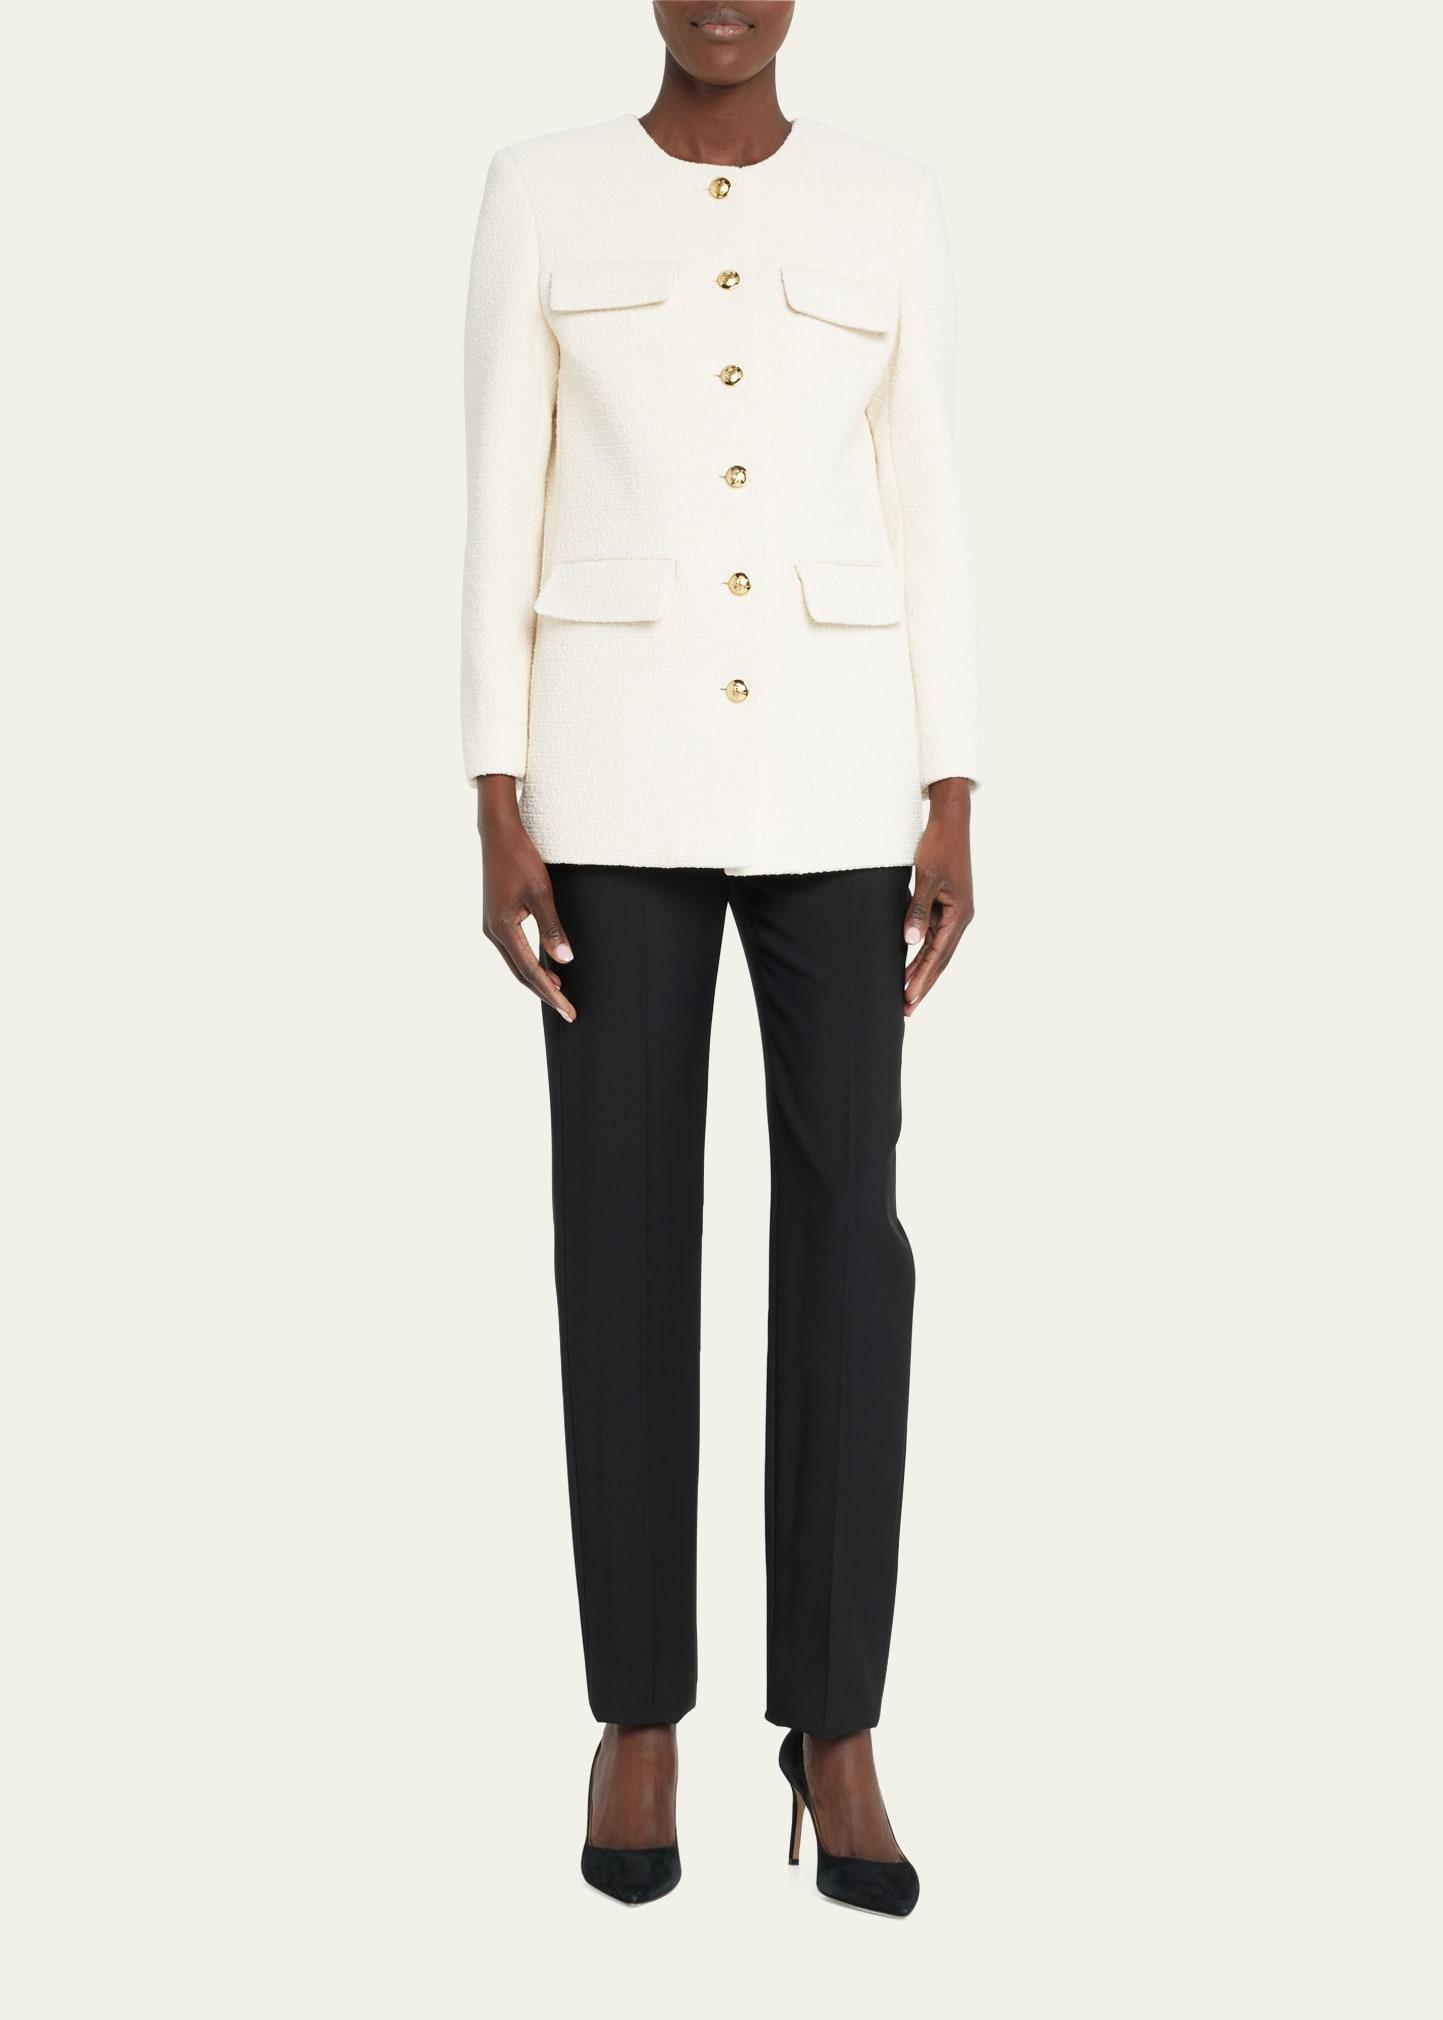 Nili Lotan Gabrielle Collarless Tweed Jacket in White | Lyst